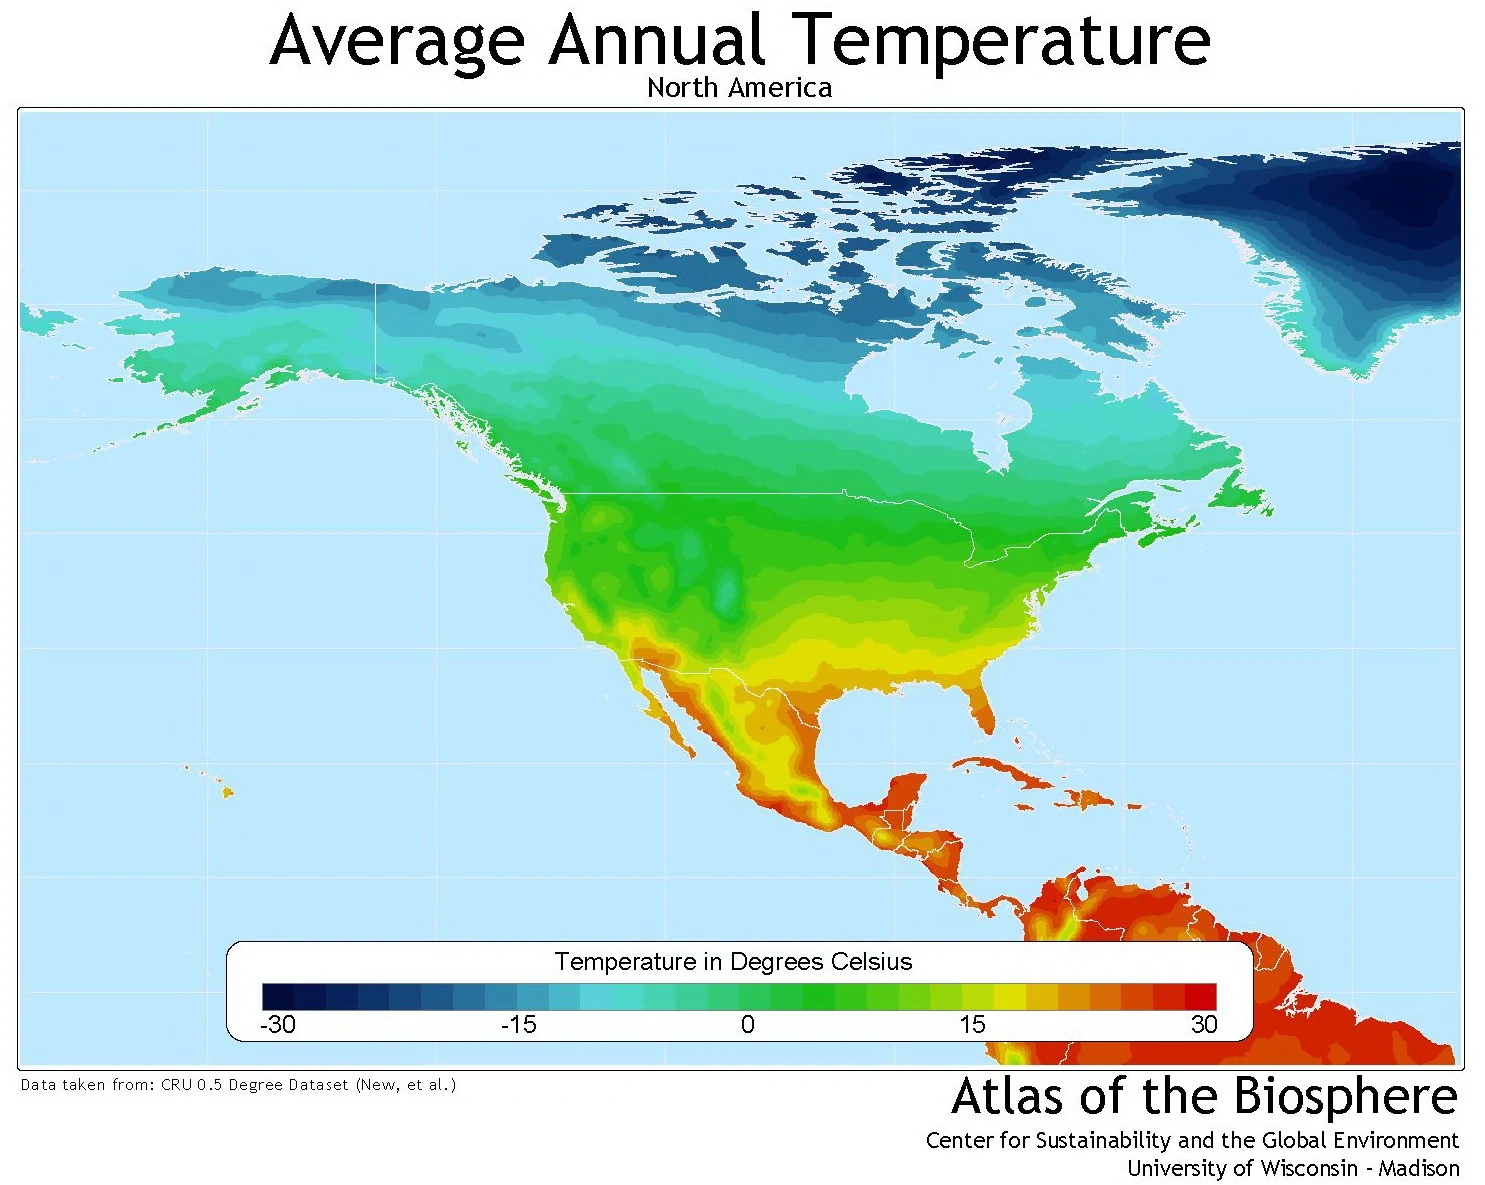 North America average annual temperature